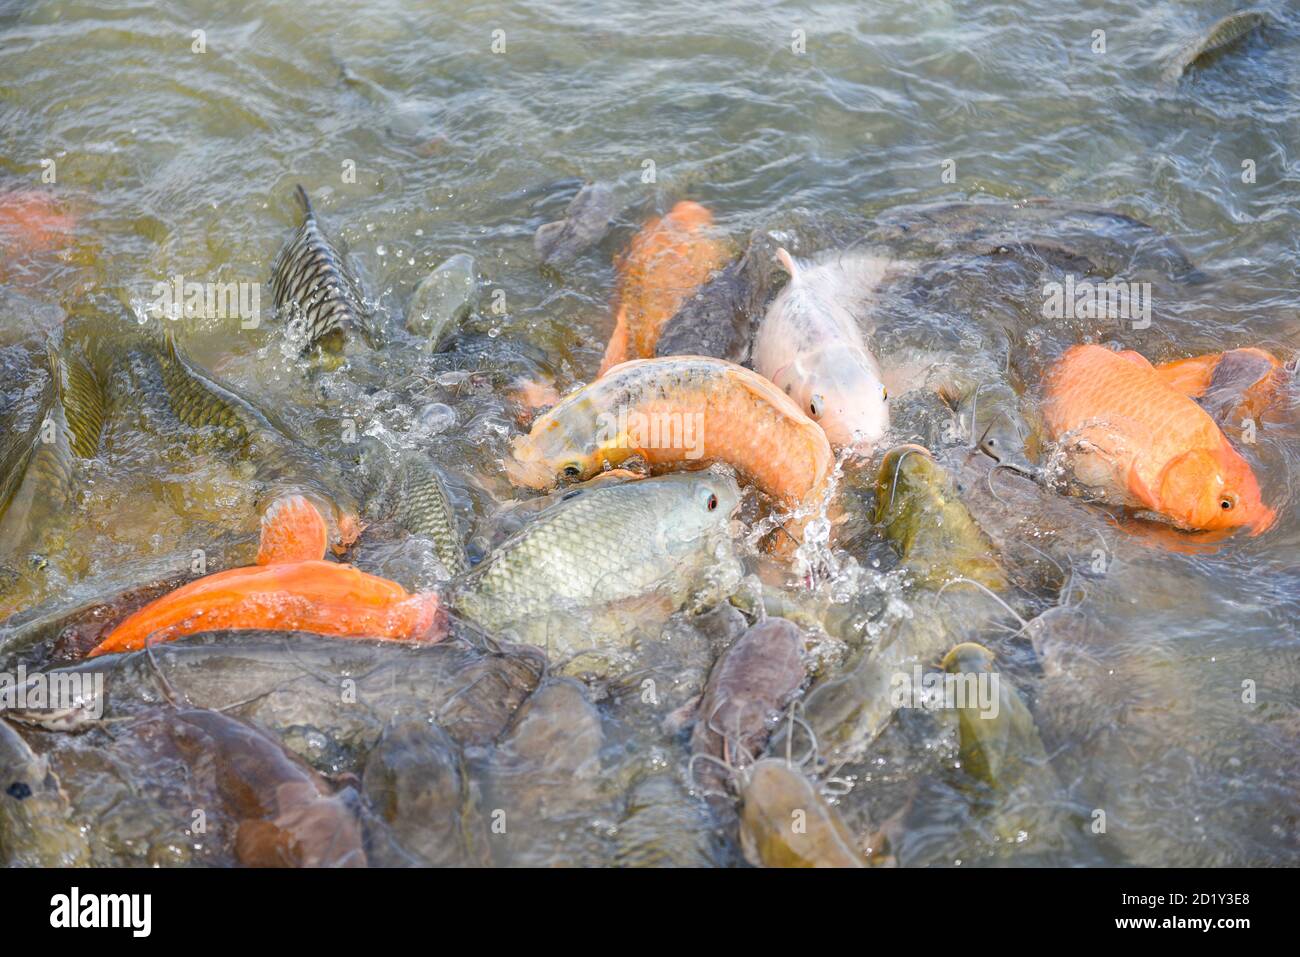 Freshwater fish farm / Golden carp fish tilapia or orange carp and catfish eating from feeding food on water surface ponds Stock Photo